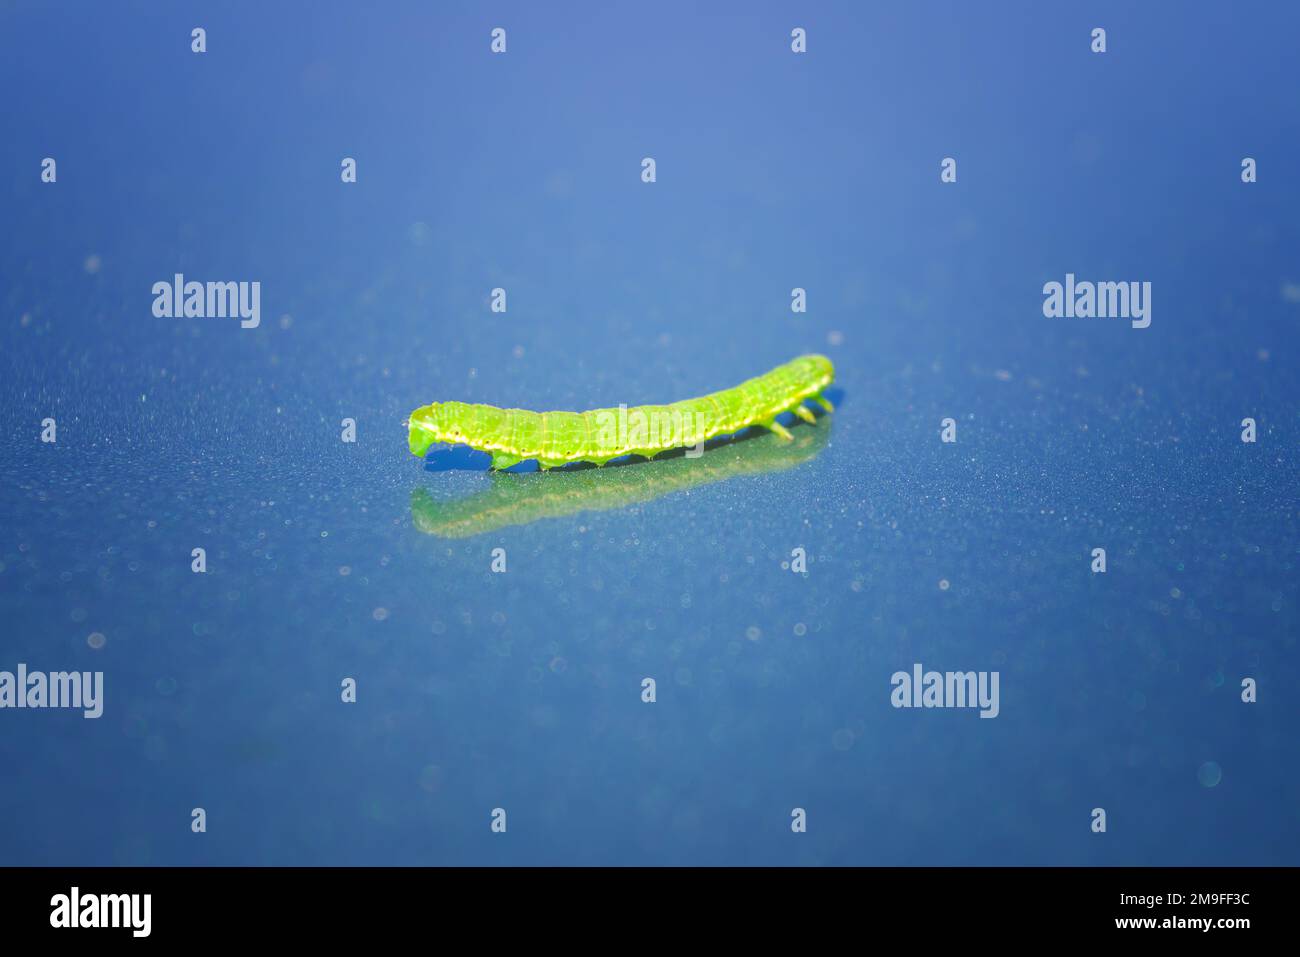 Green Geometrid caterpillar looper or inchworm crawling forward in characteristic looping movement close-up. Stock Photo